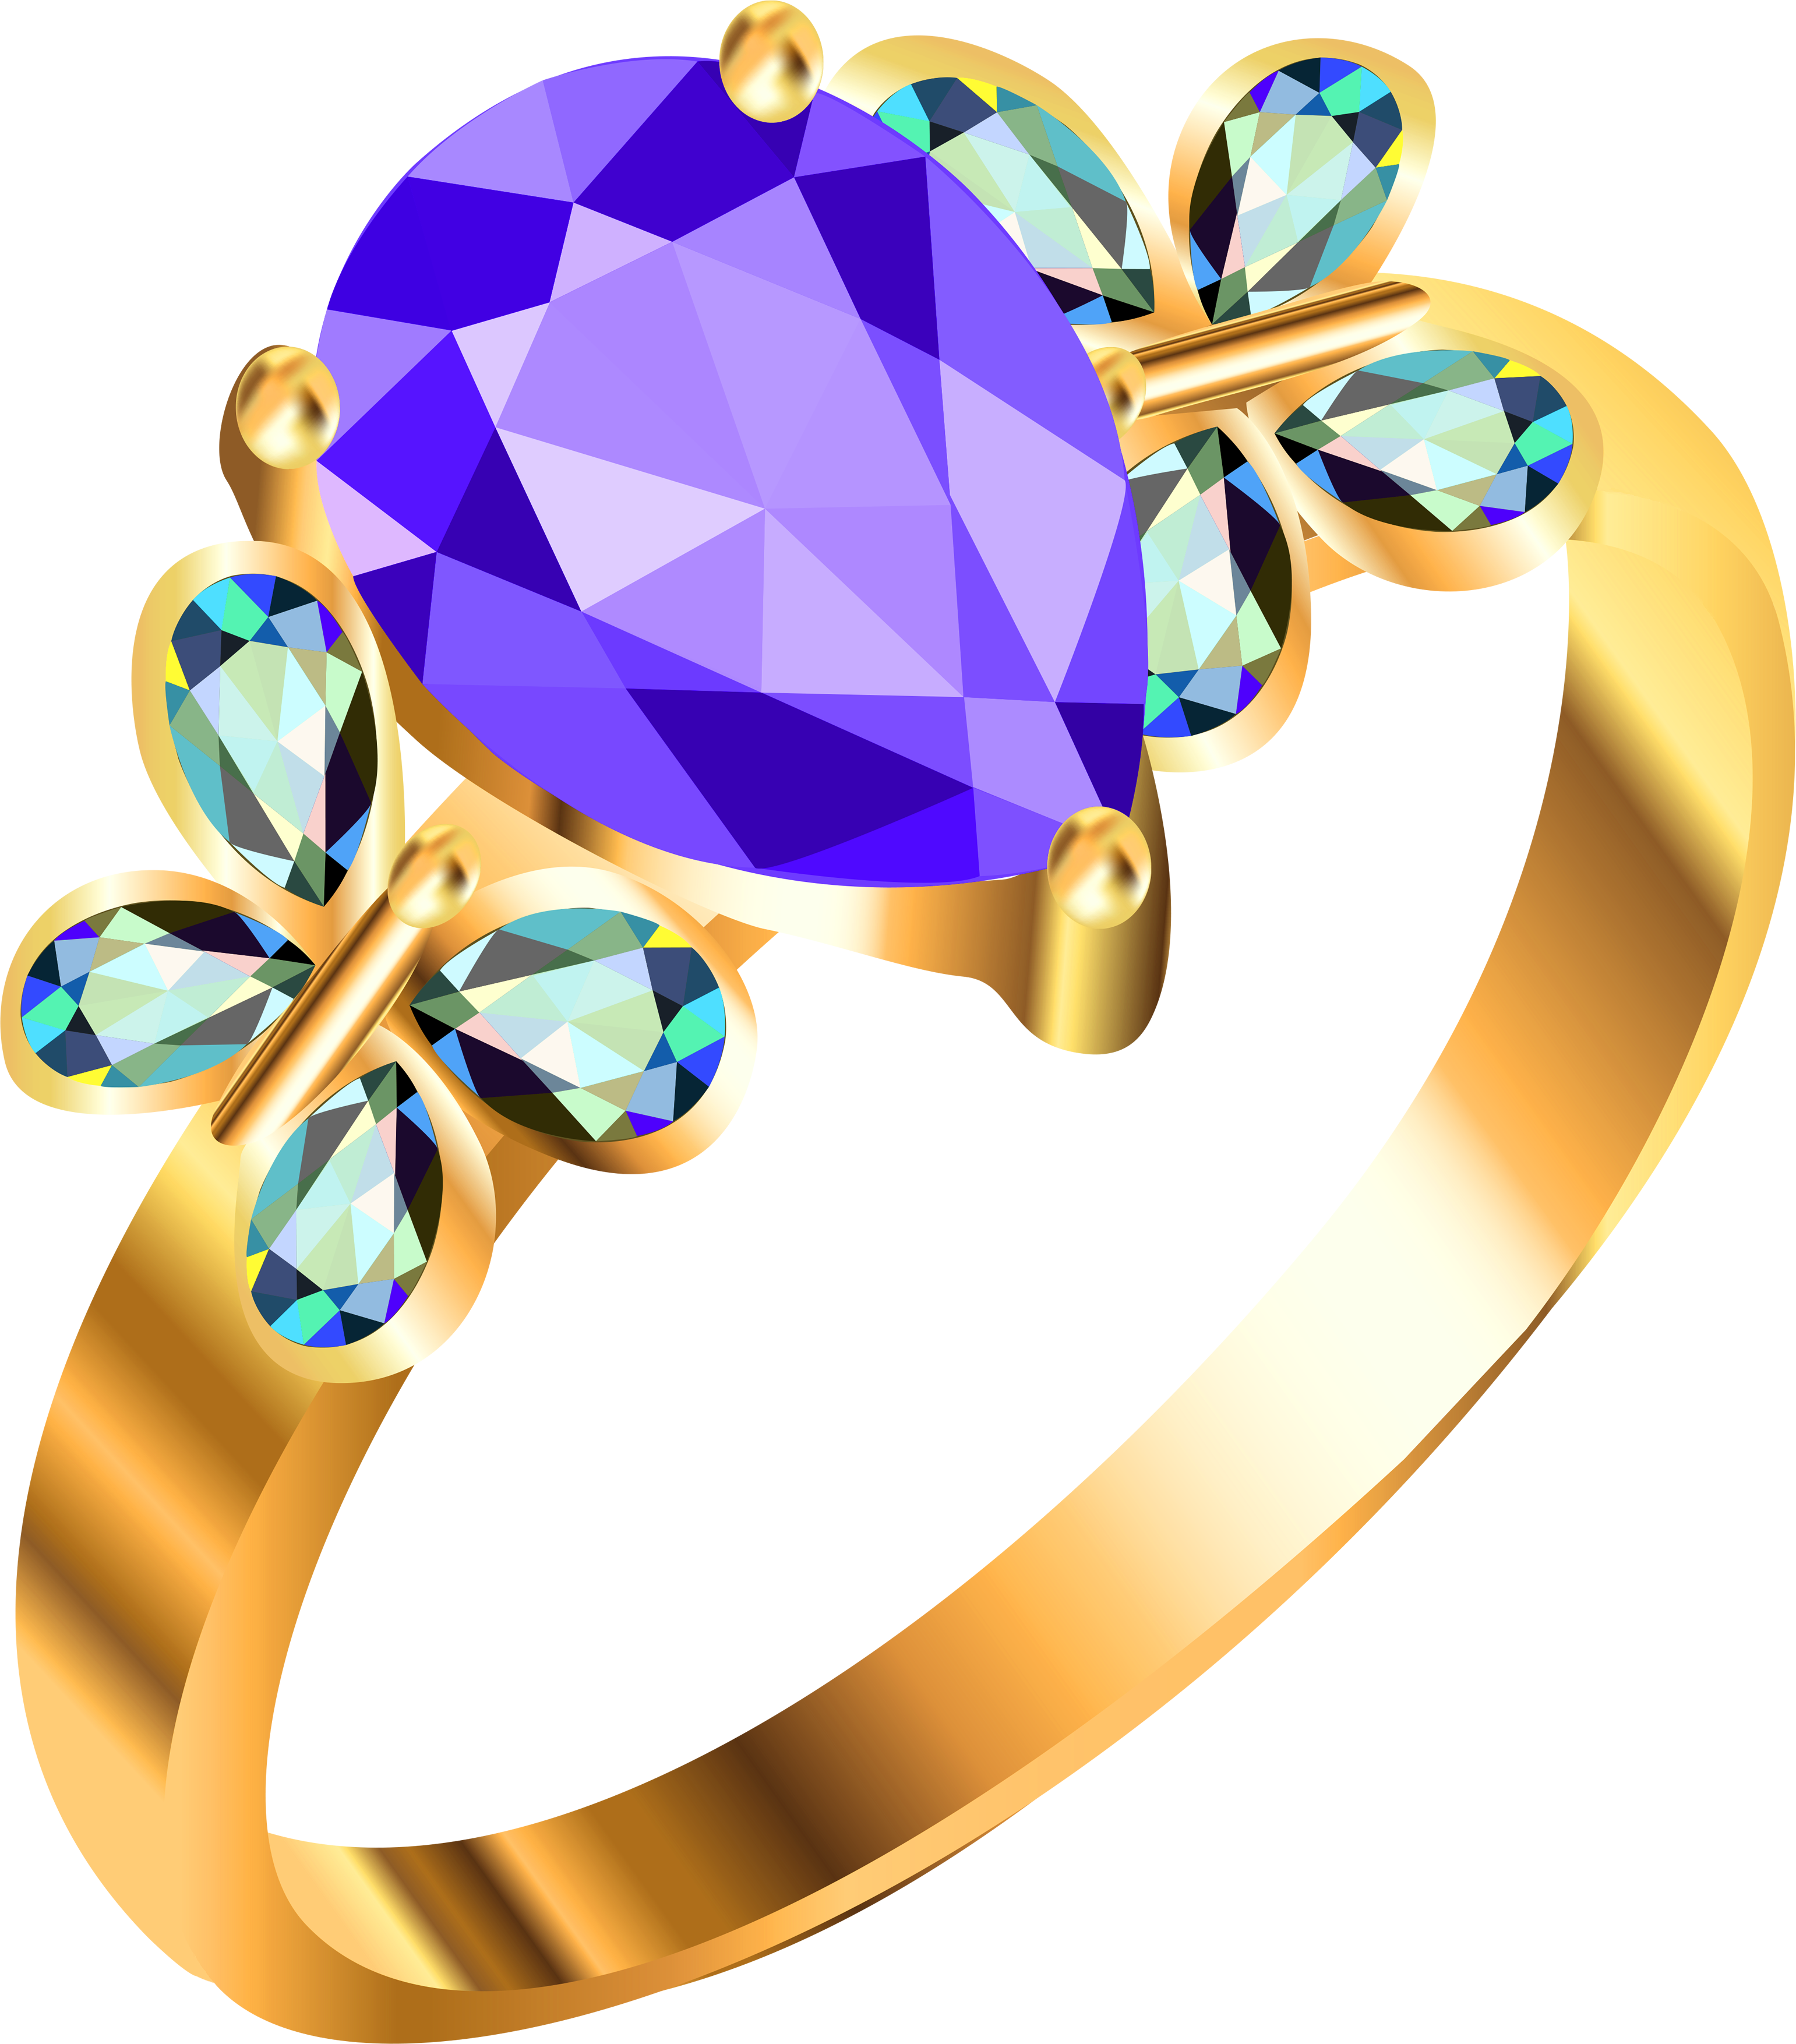 Gems u0026amp; Jewelry Clipar